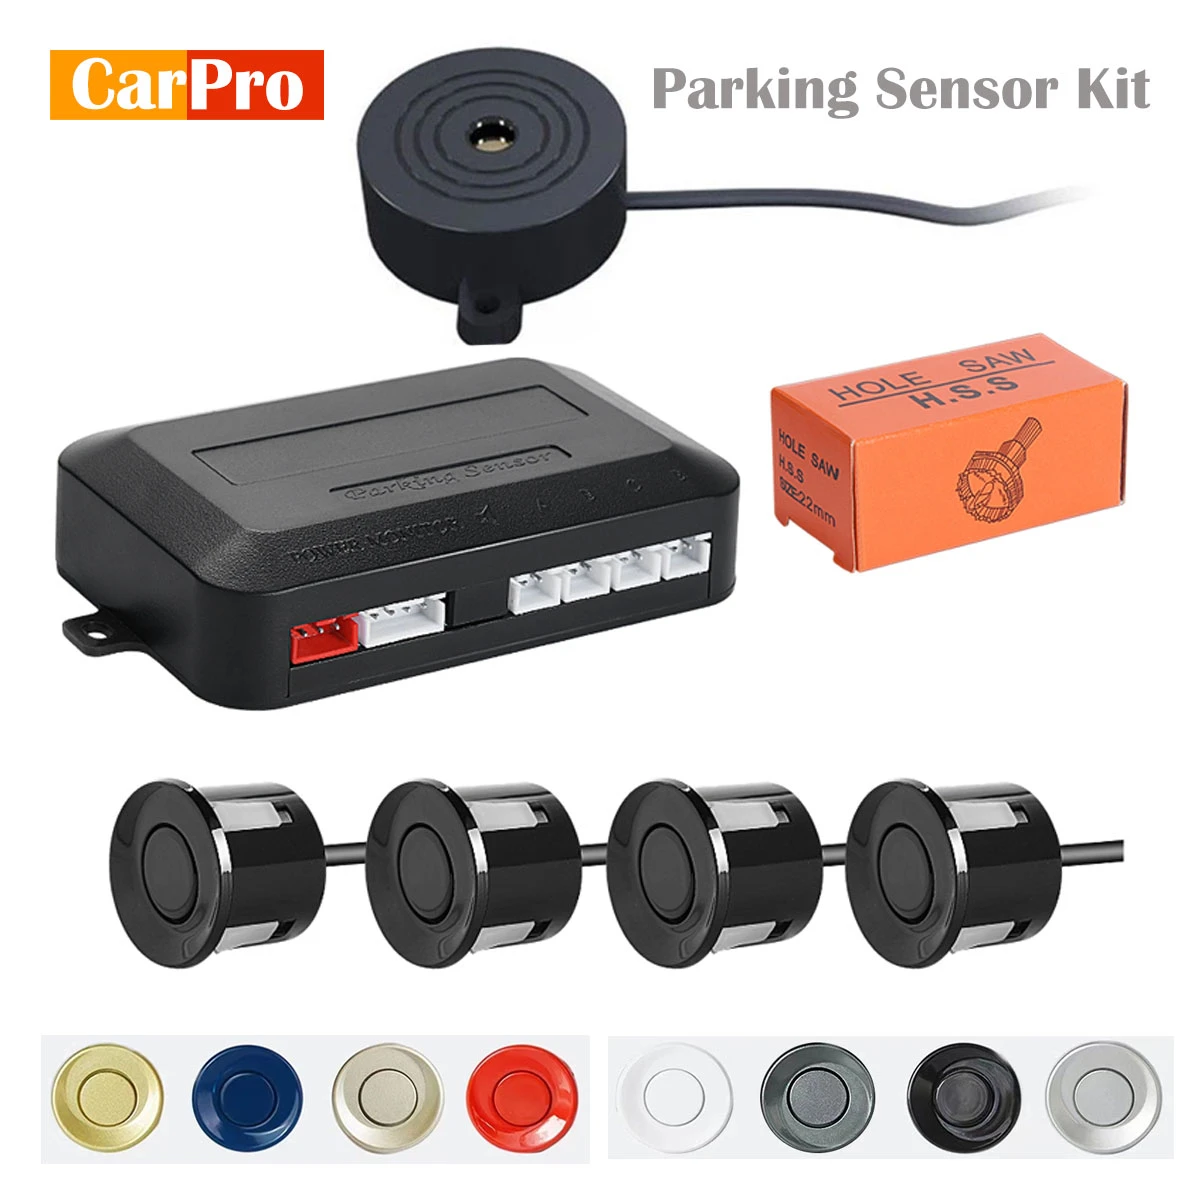 CarPro 12V 22mm Car Parking Sensor Kit Universal 4 Sensors Buzzer Reverse Backup Radar Sound Alert Indicator Probe System